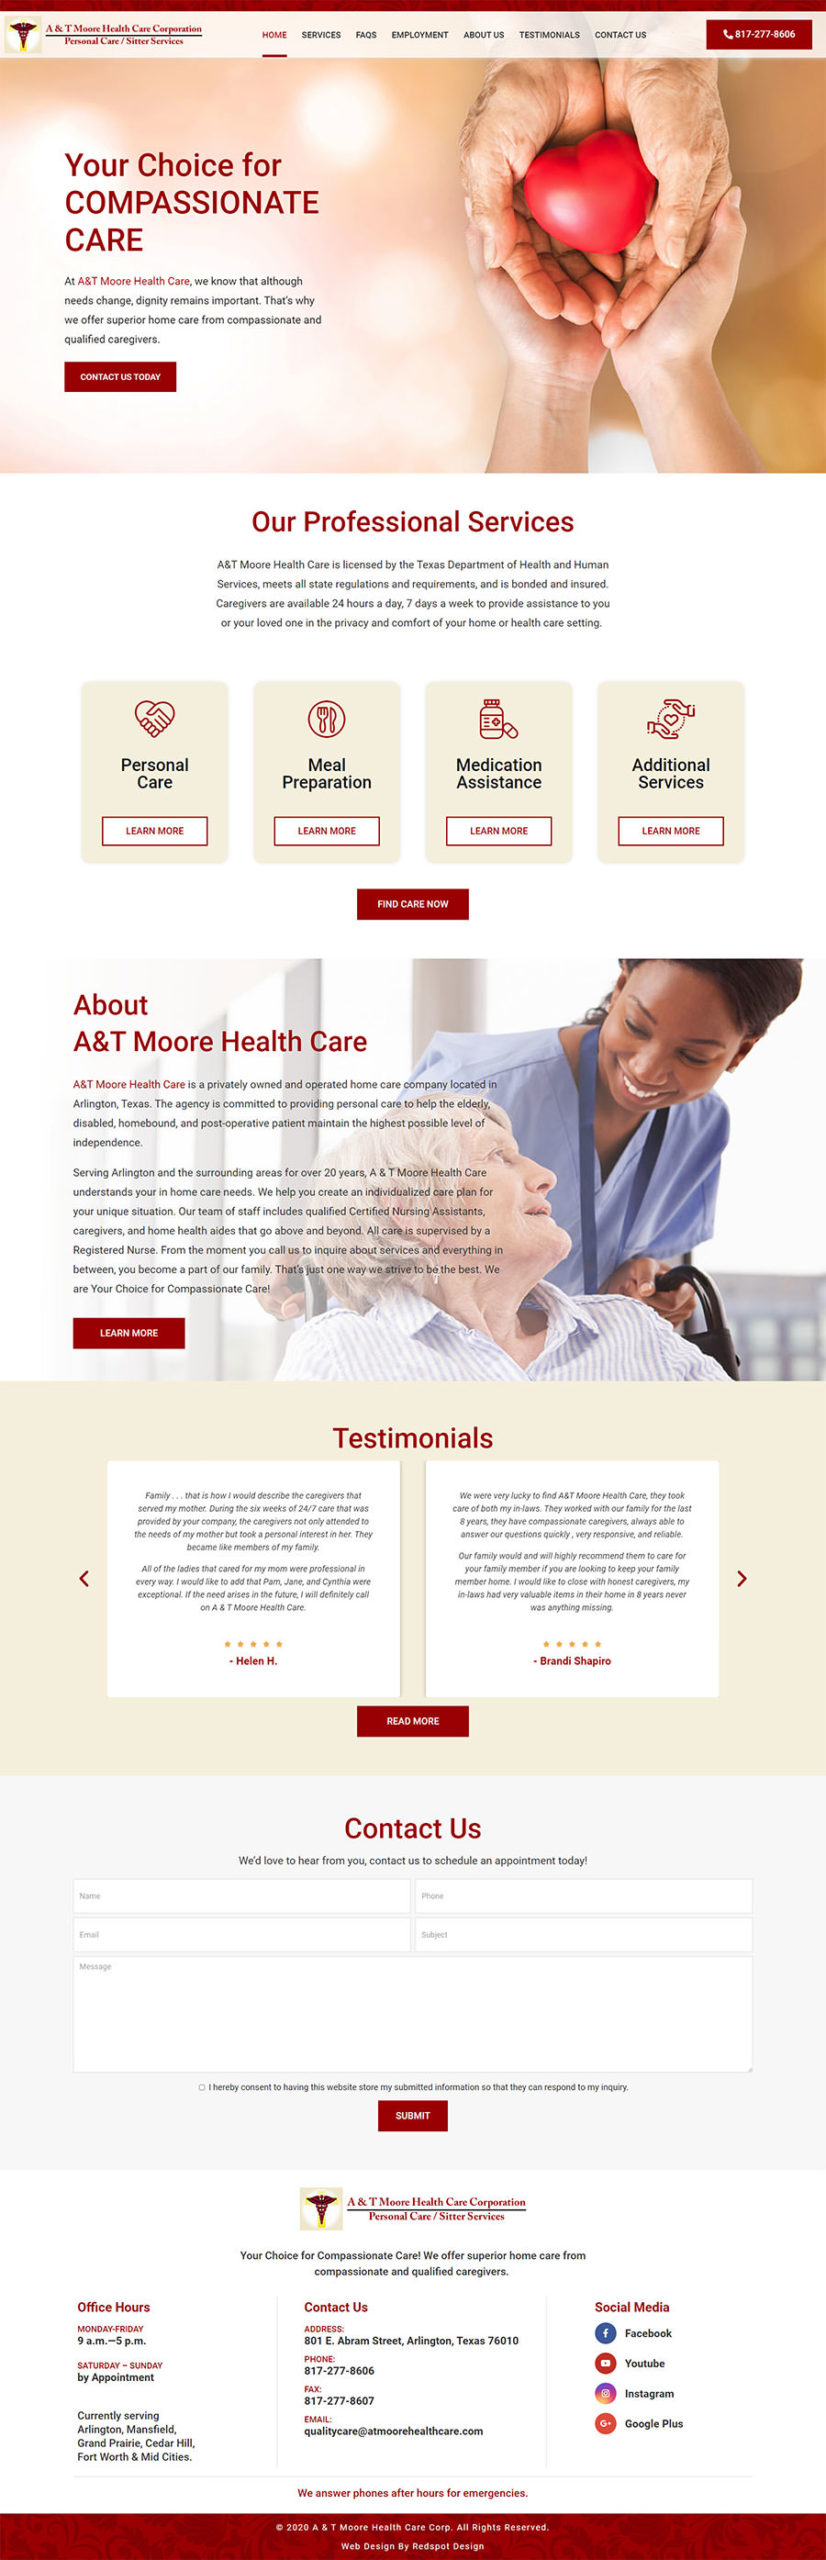 Web Design for A&T Moore Health Care - 801 E. Abram Street, Arlington, Texas 76010